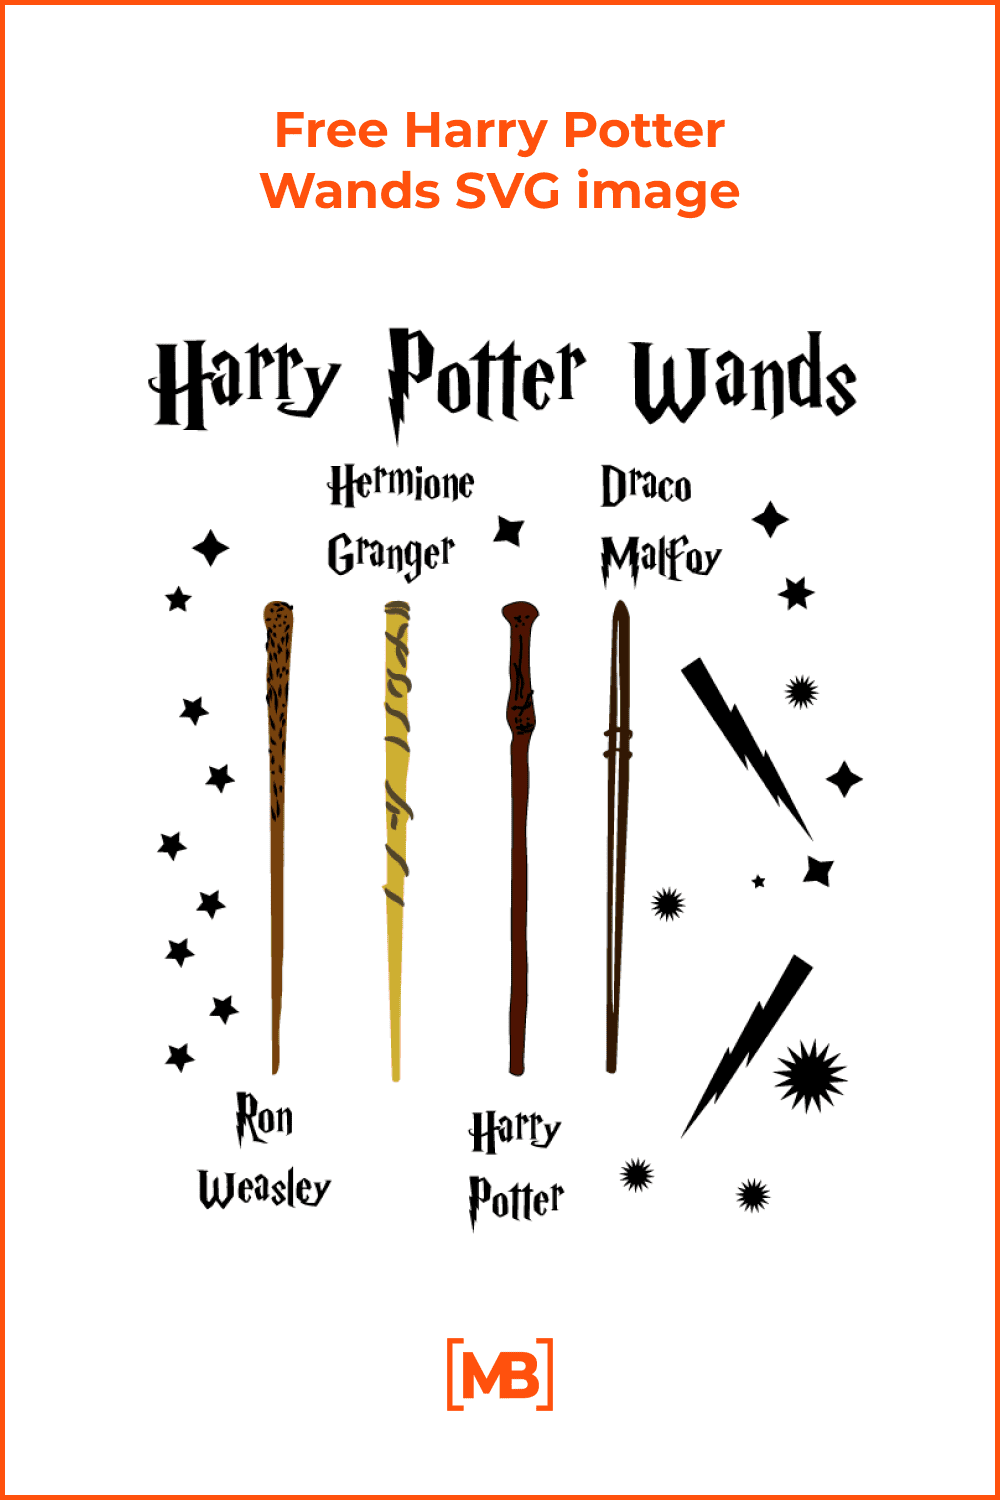 Free Harry Potter wands SVG image.